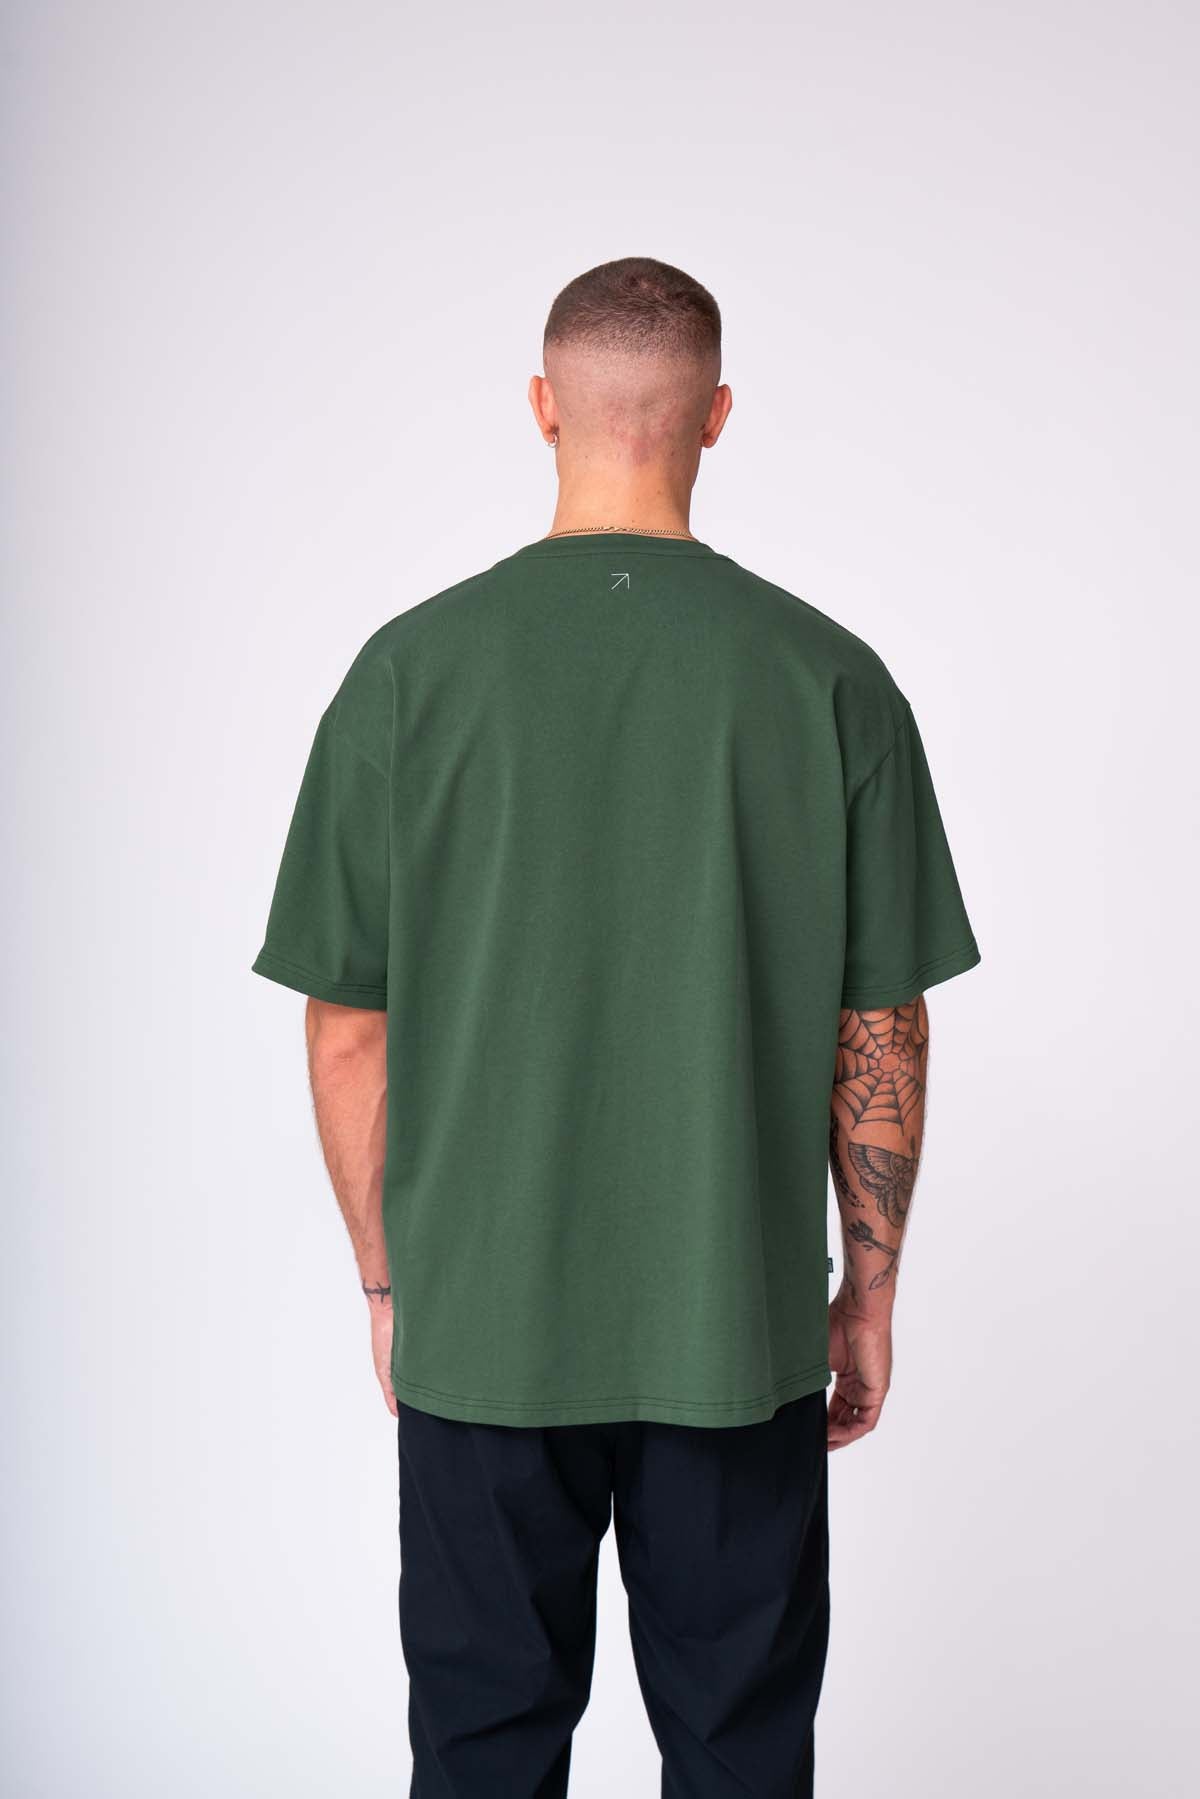 Alaise Box Fit T-Shirt - Green